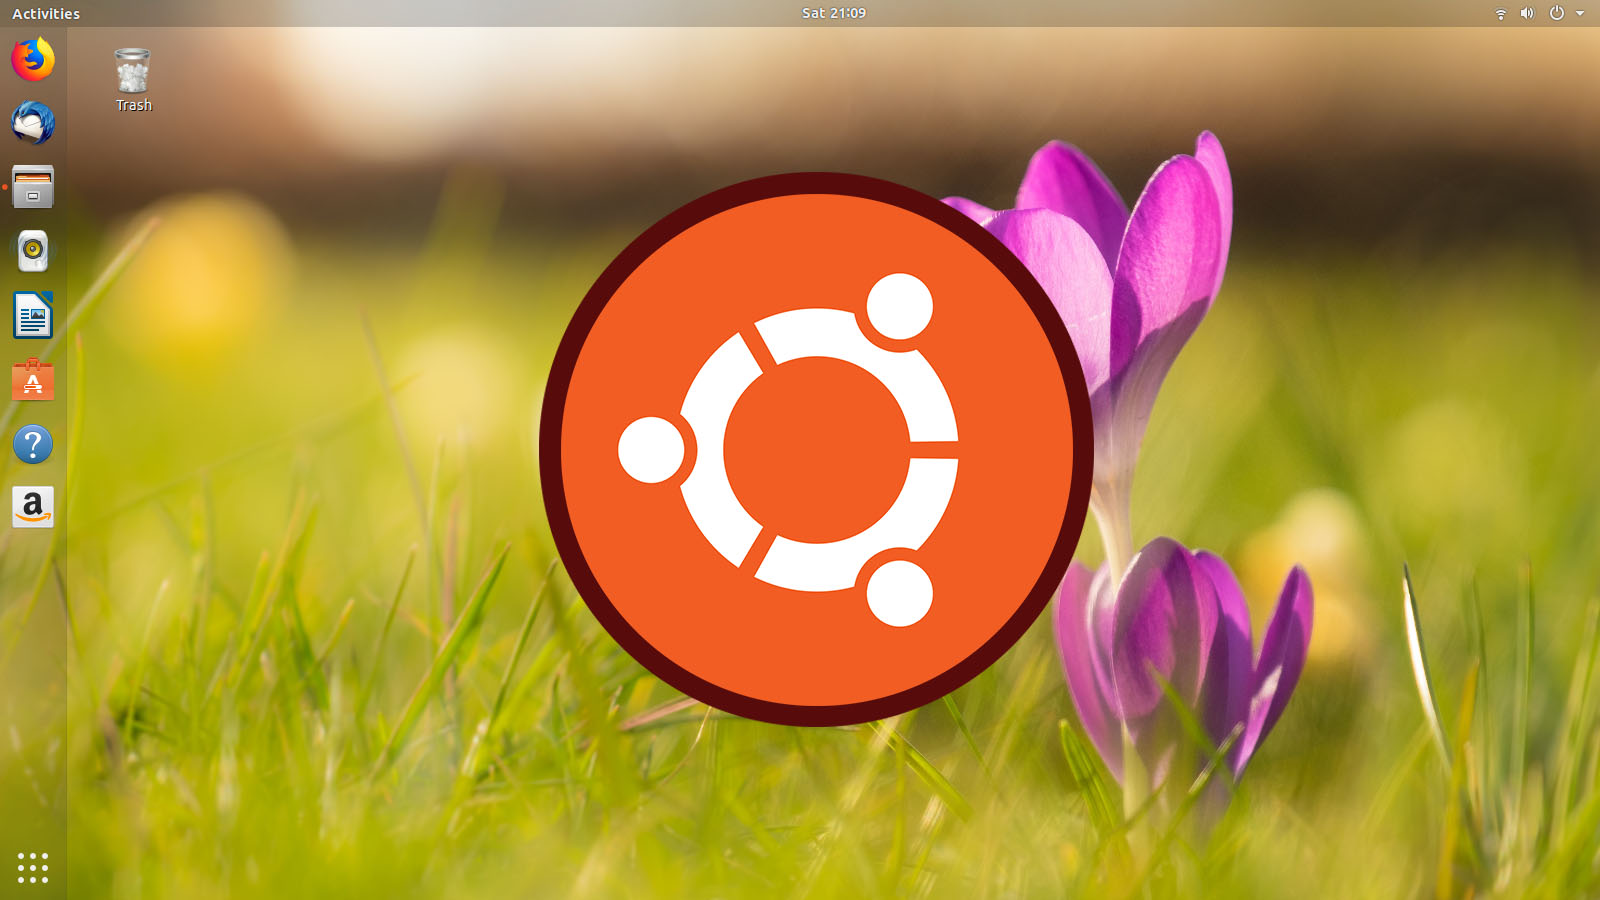 How To Change Background In Ubuntu 18.04 LTS (Bionic Beaver)